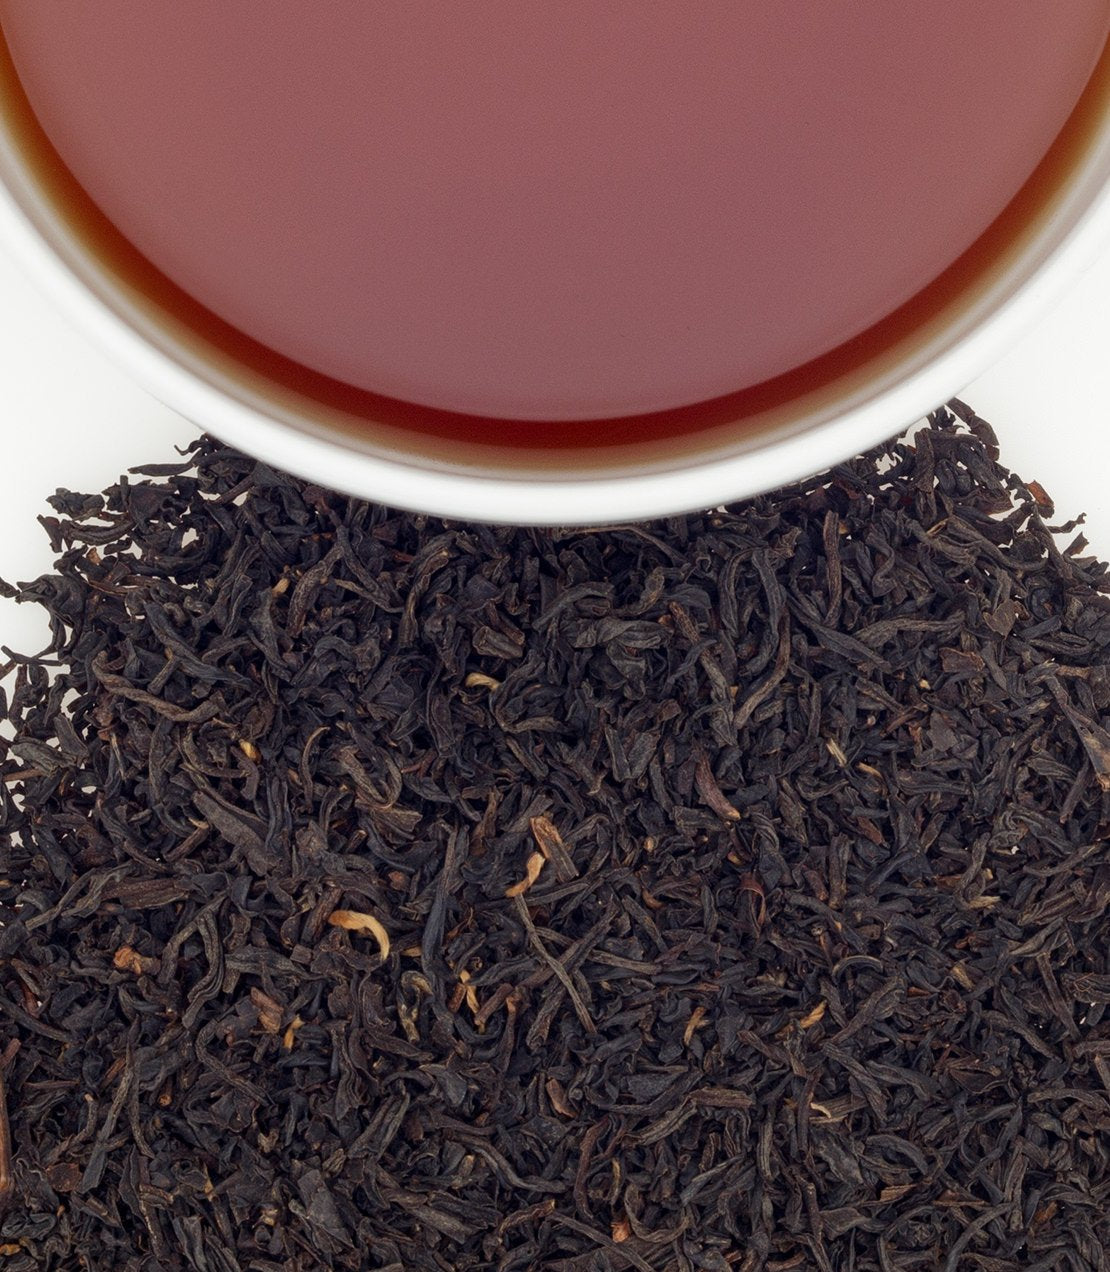 English Breakfast - Black tea 100% keemun  - Harney & Sons Fine Teas Europe